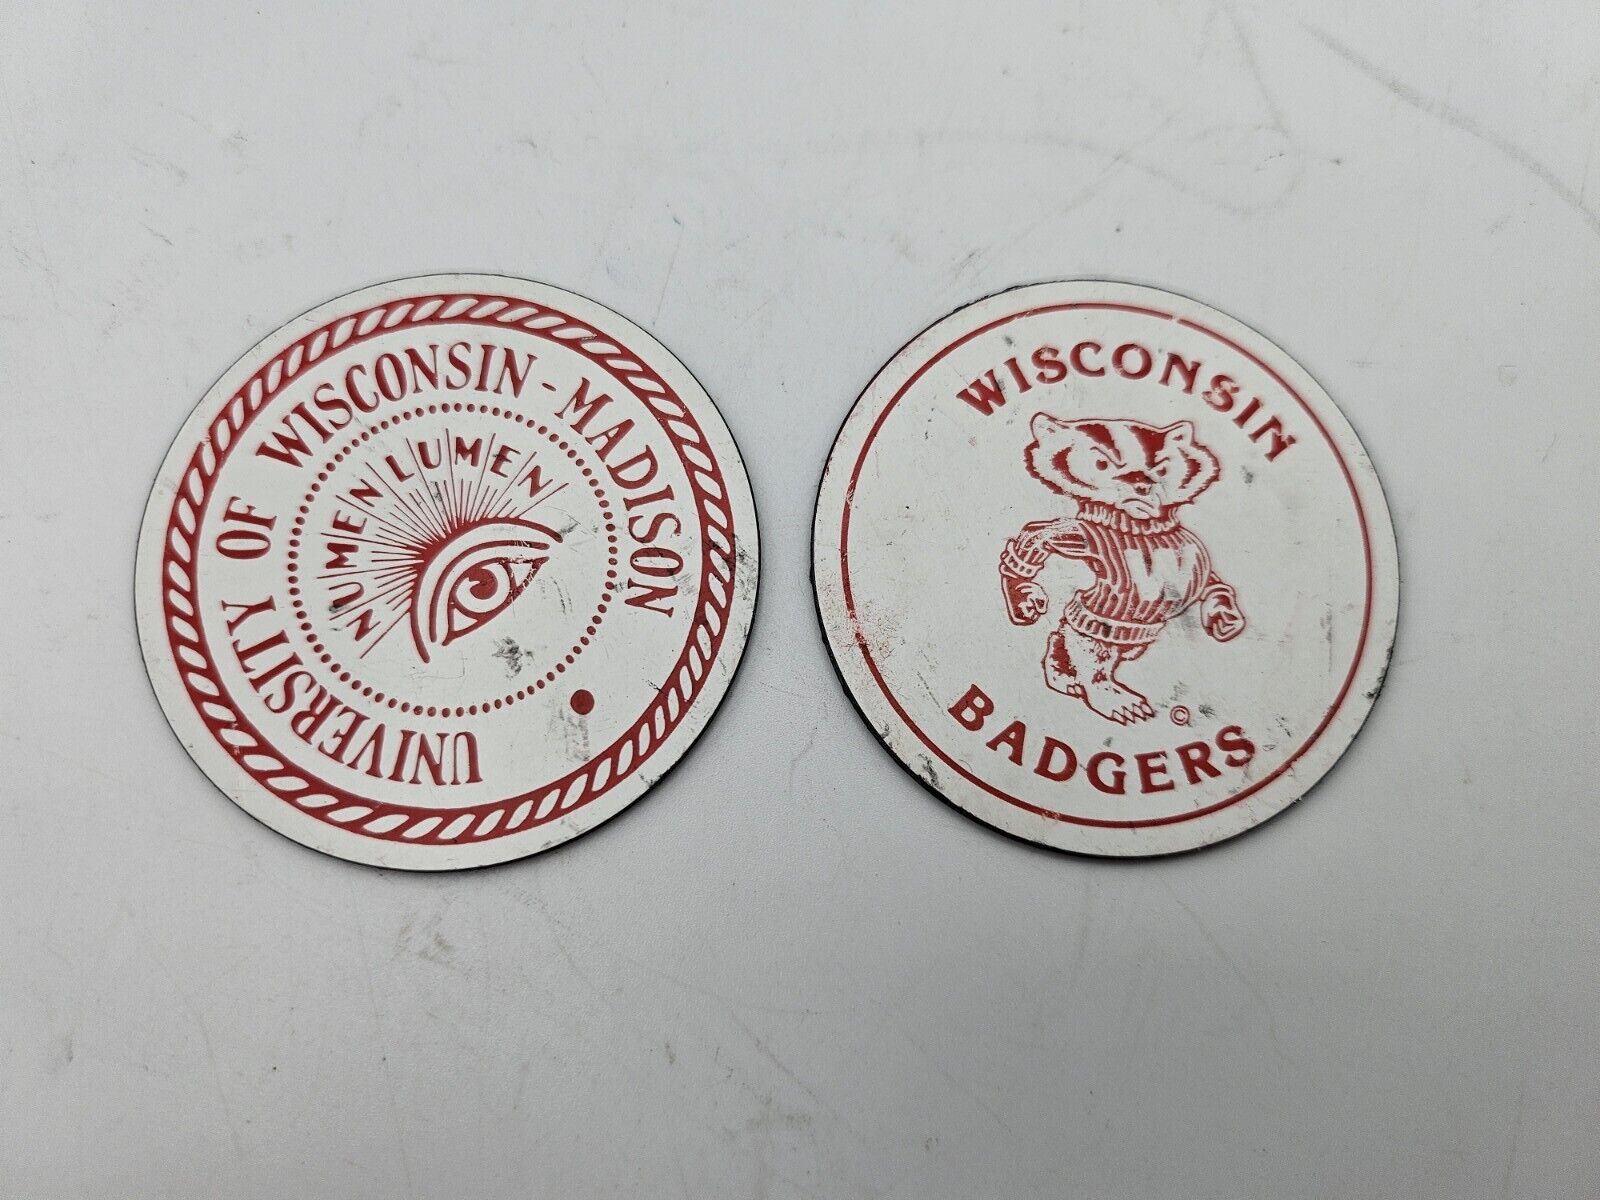 Vtg University Wisconsin Badgers Magnets Bucky Badger Numen Lumen